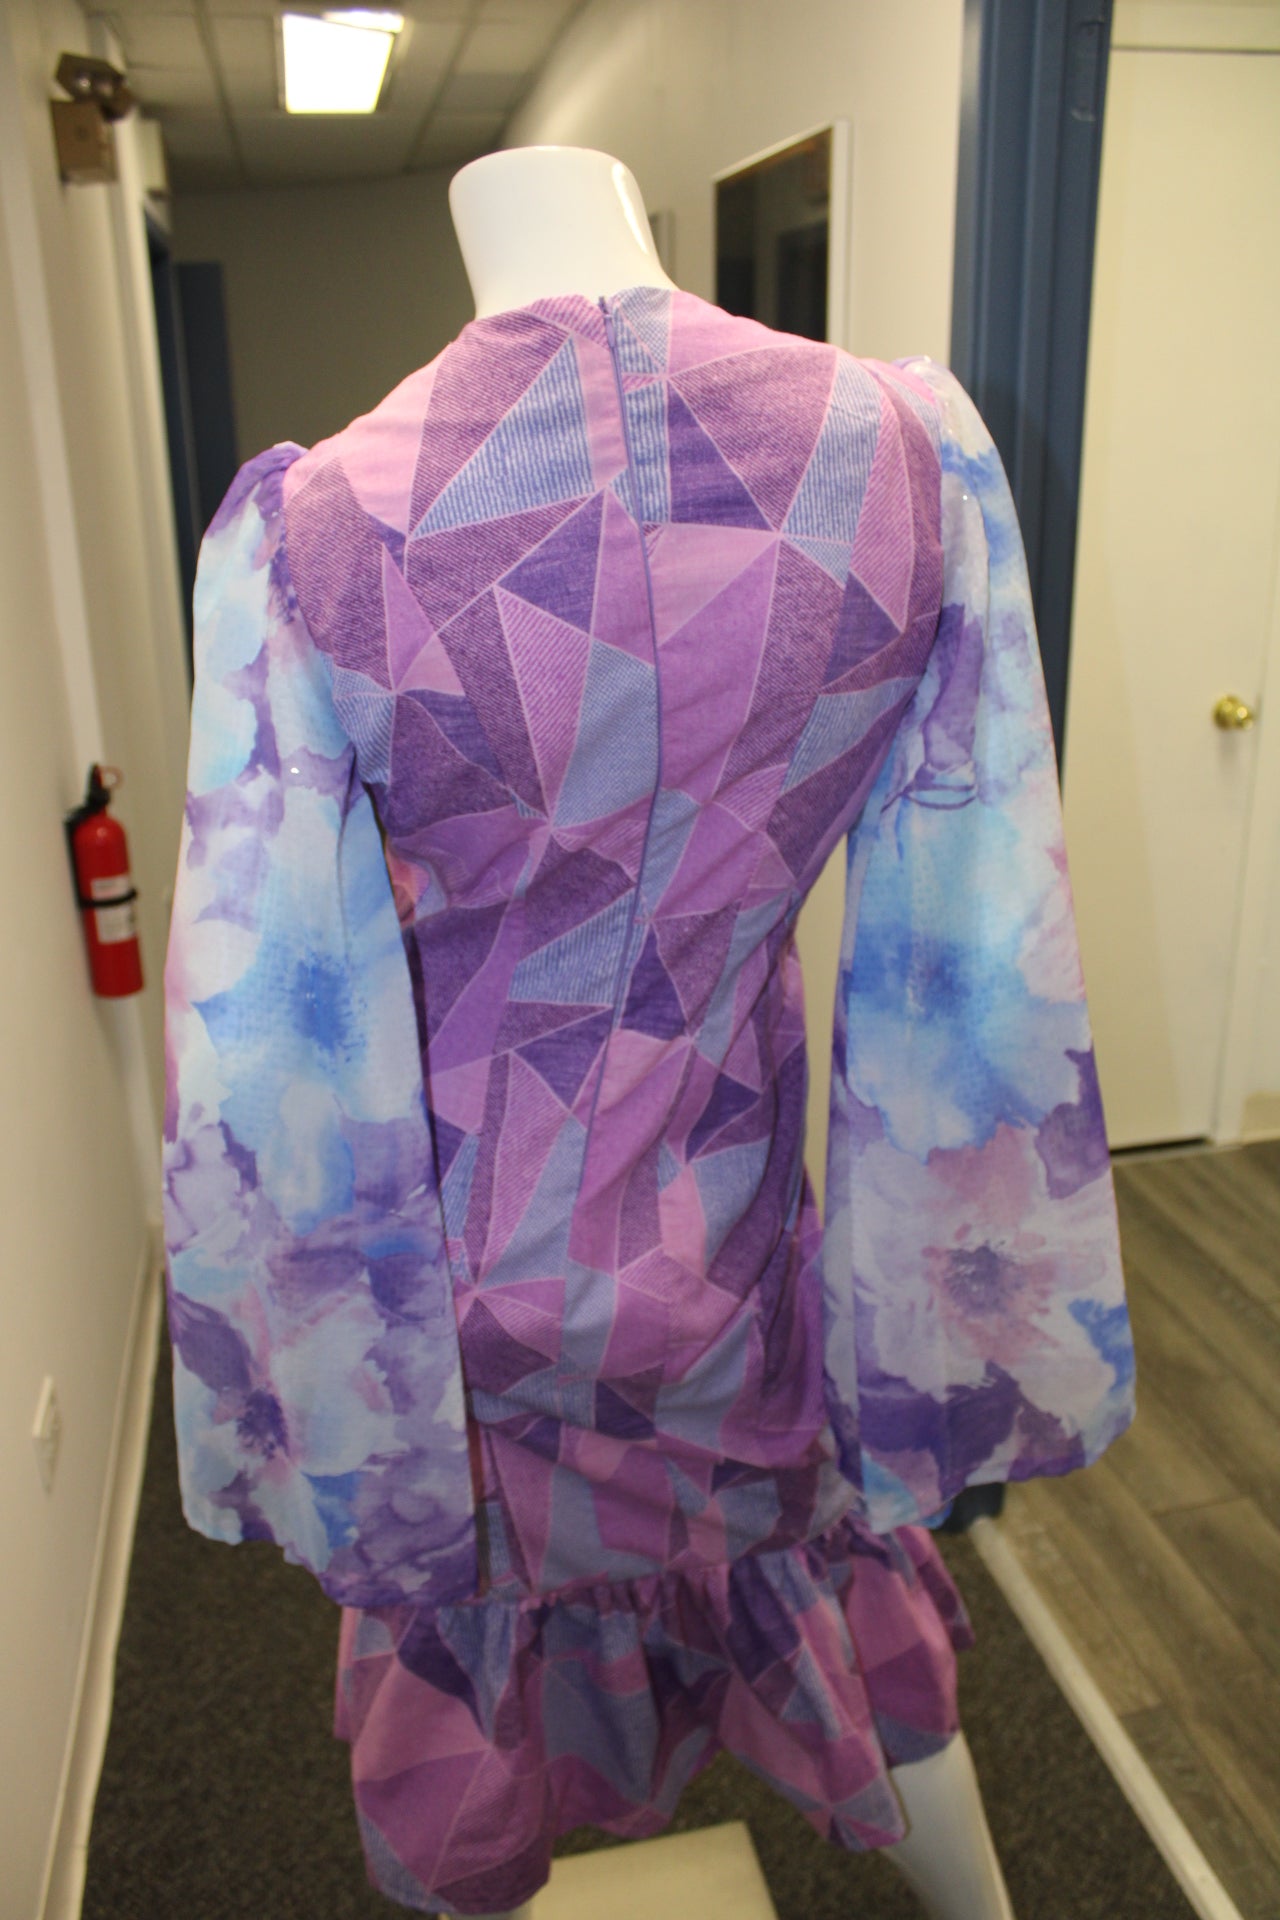 Long sleeve purple mixed fabric dress modest with flounce